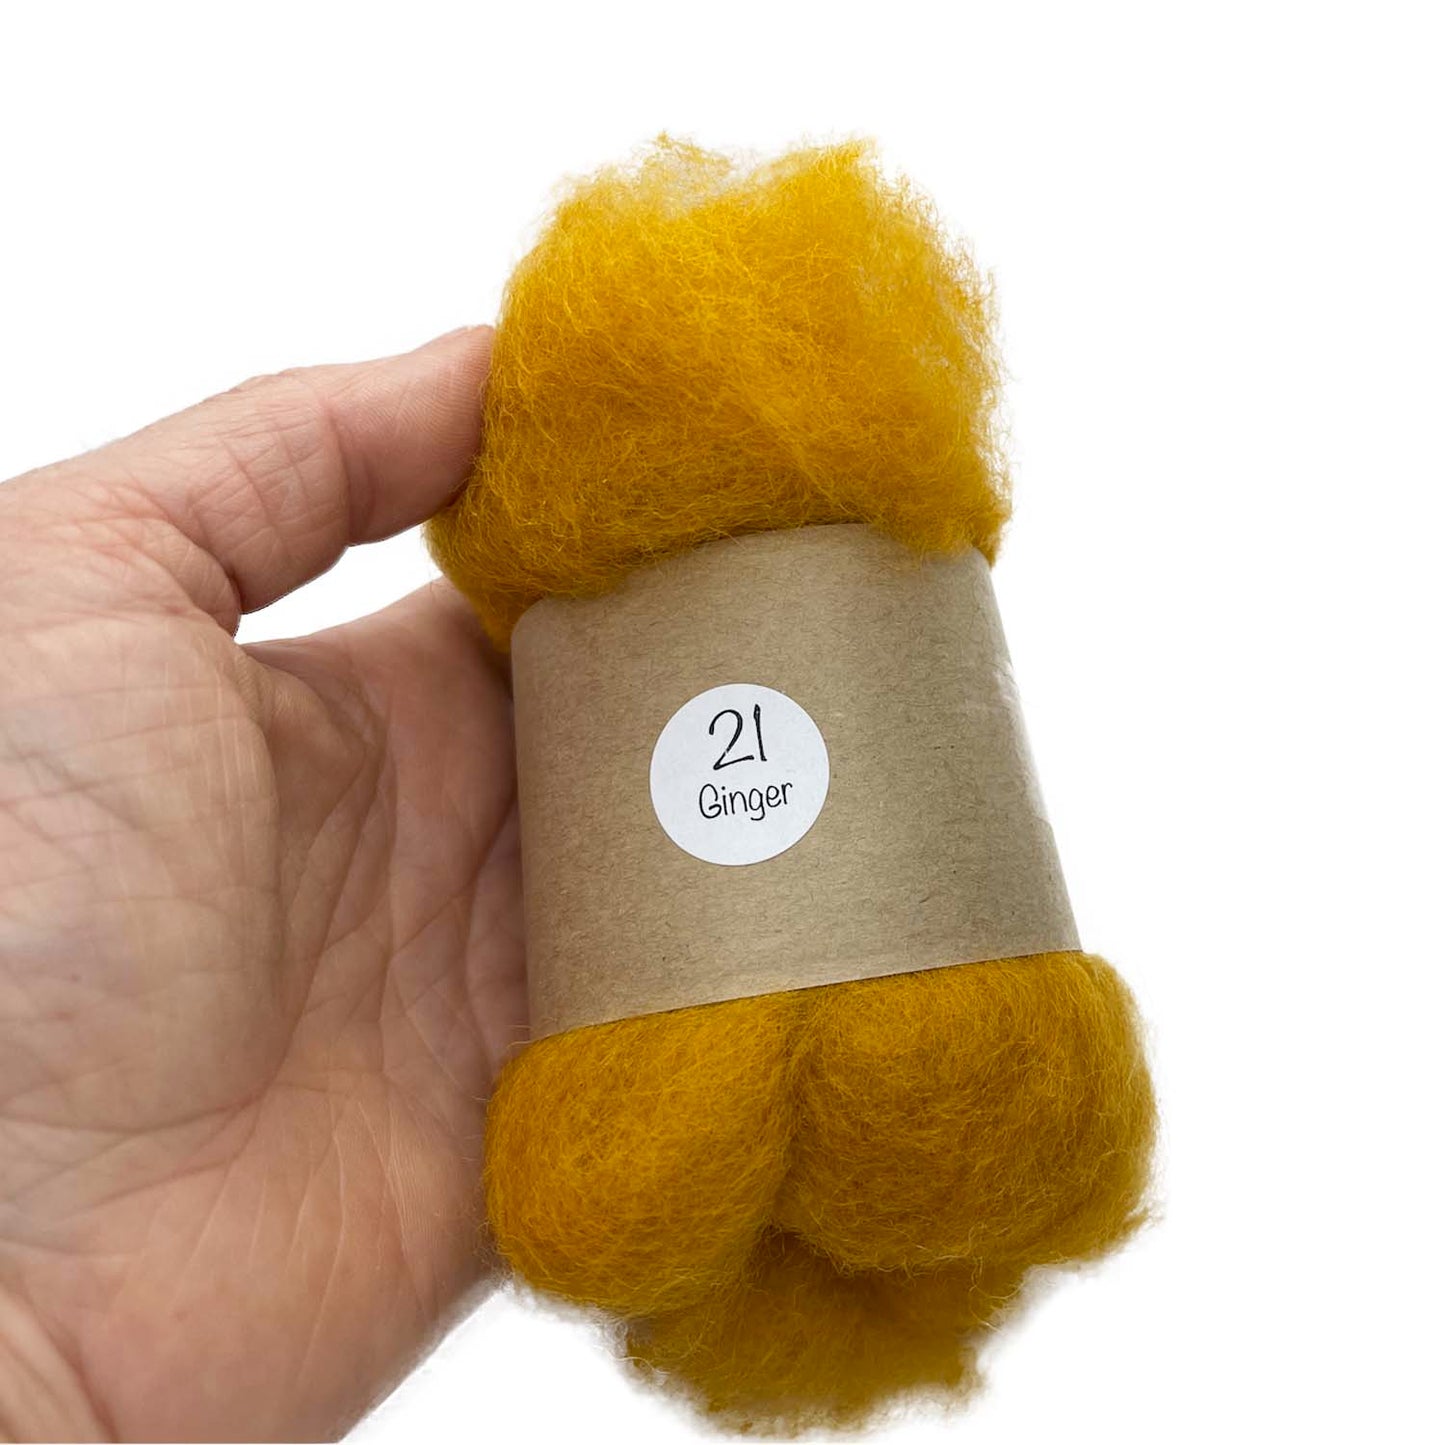 Carded Wool For Felting, Needle Felting Batting, Ginger  ( 21 )